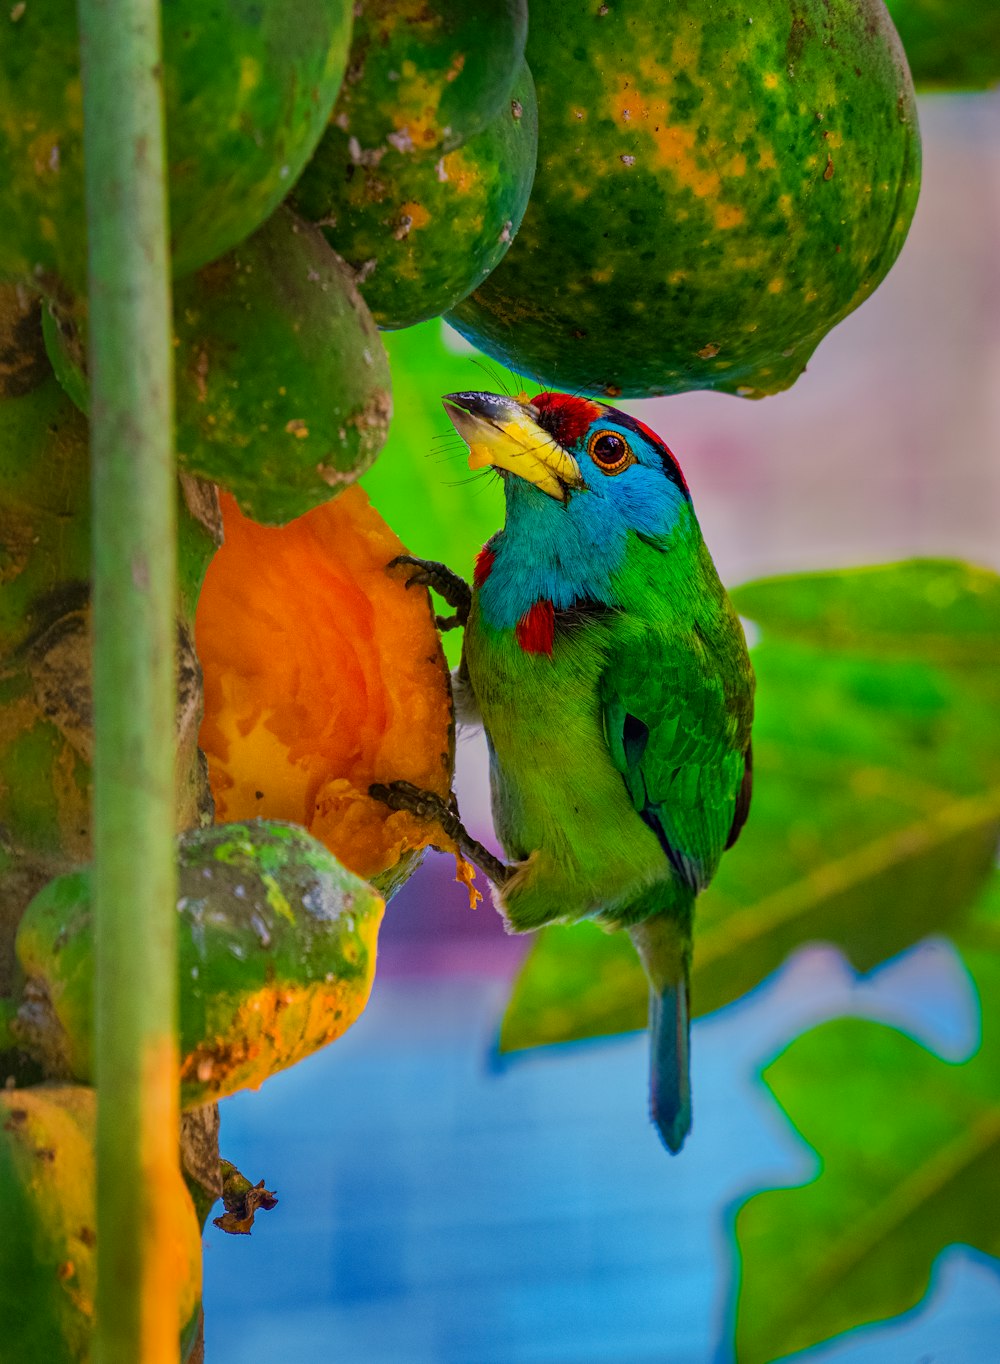 green and orange bird on green fruit